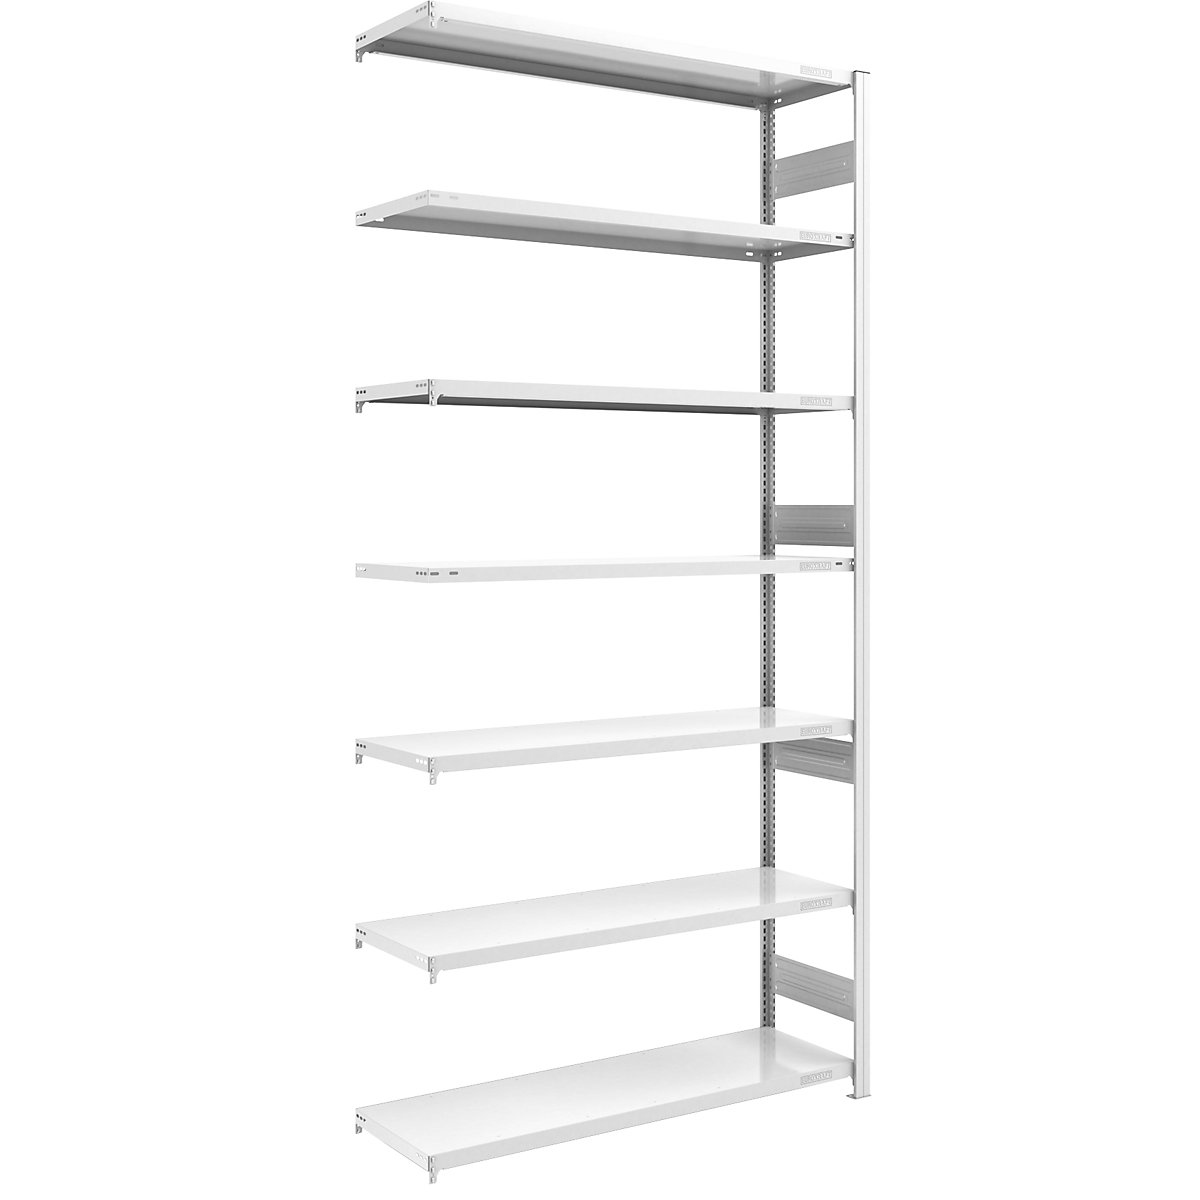 Heavy duty boltless shelving unit, grey, double sided – hofe, shelf unit height 3000 mm, 7 shelves, extension shelf unit, WxD 1300 x 500 mm-1